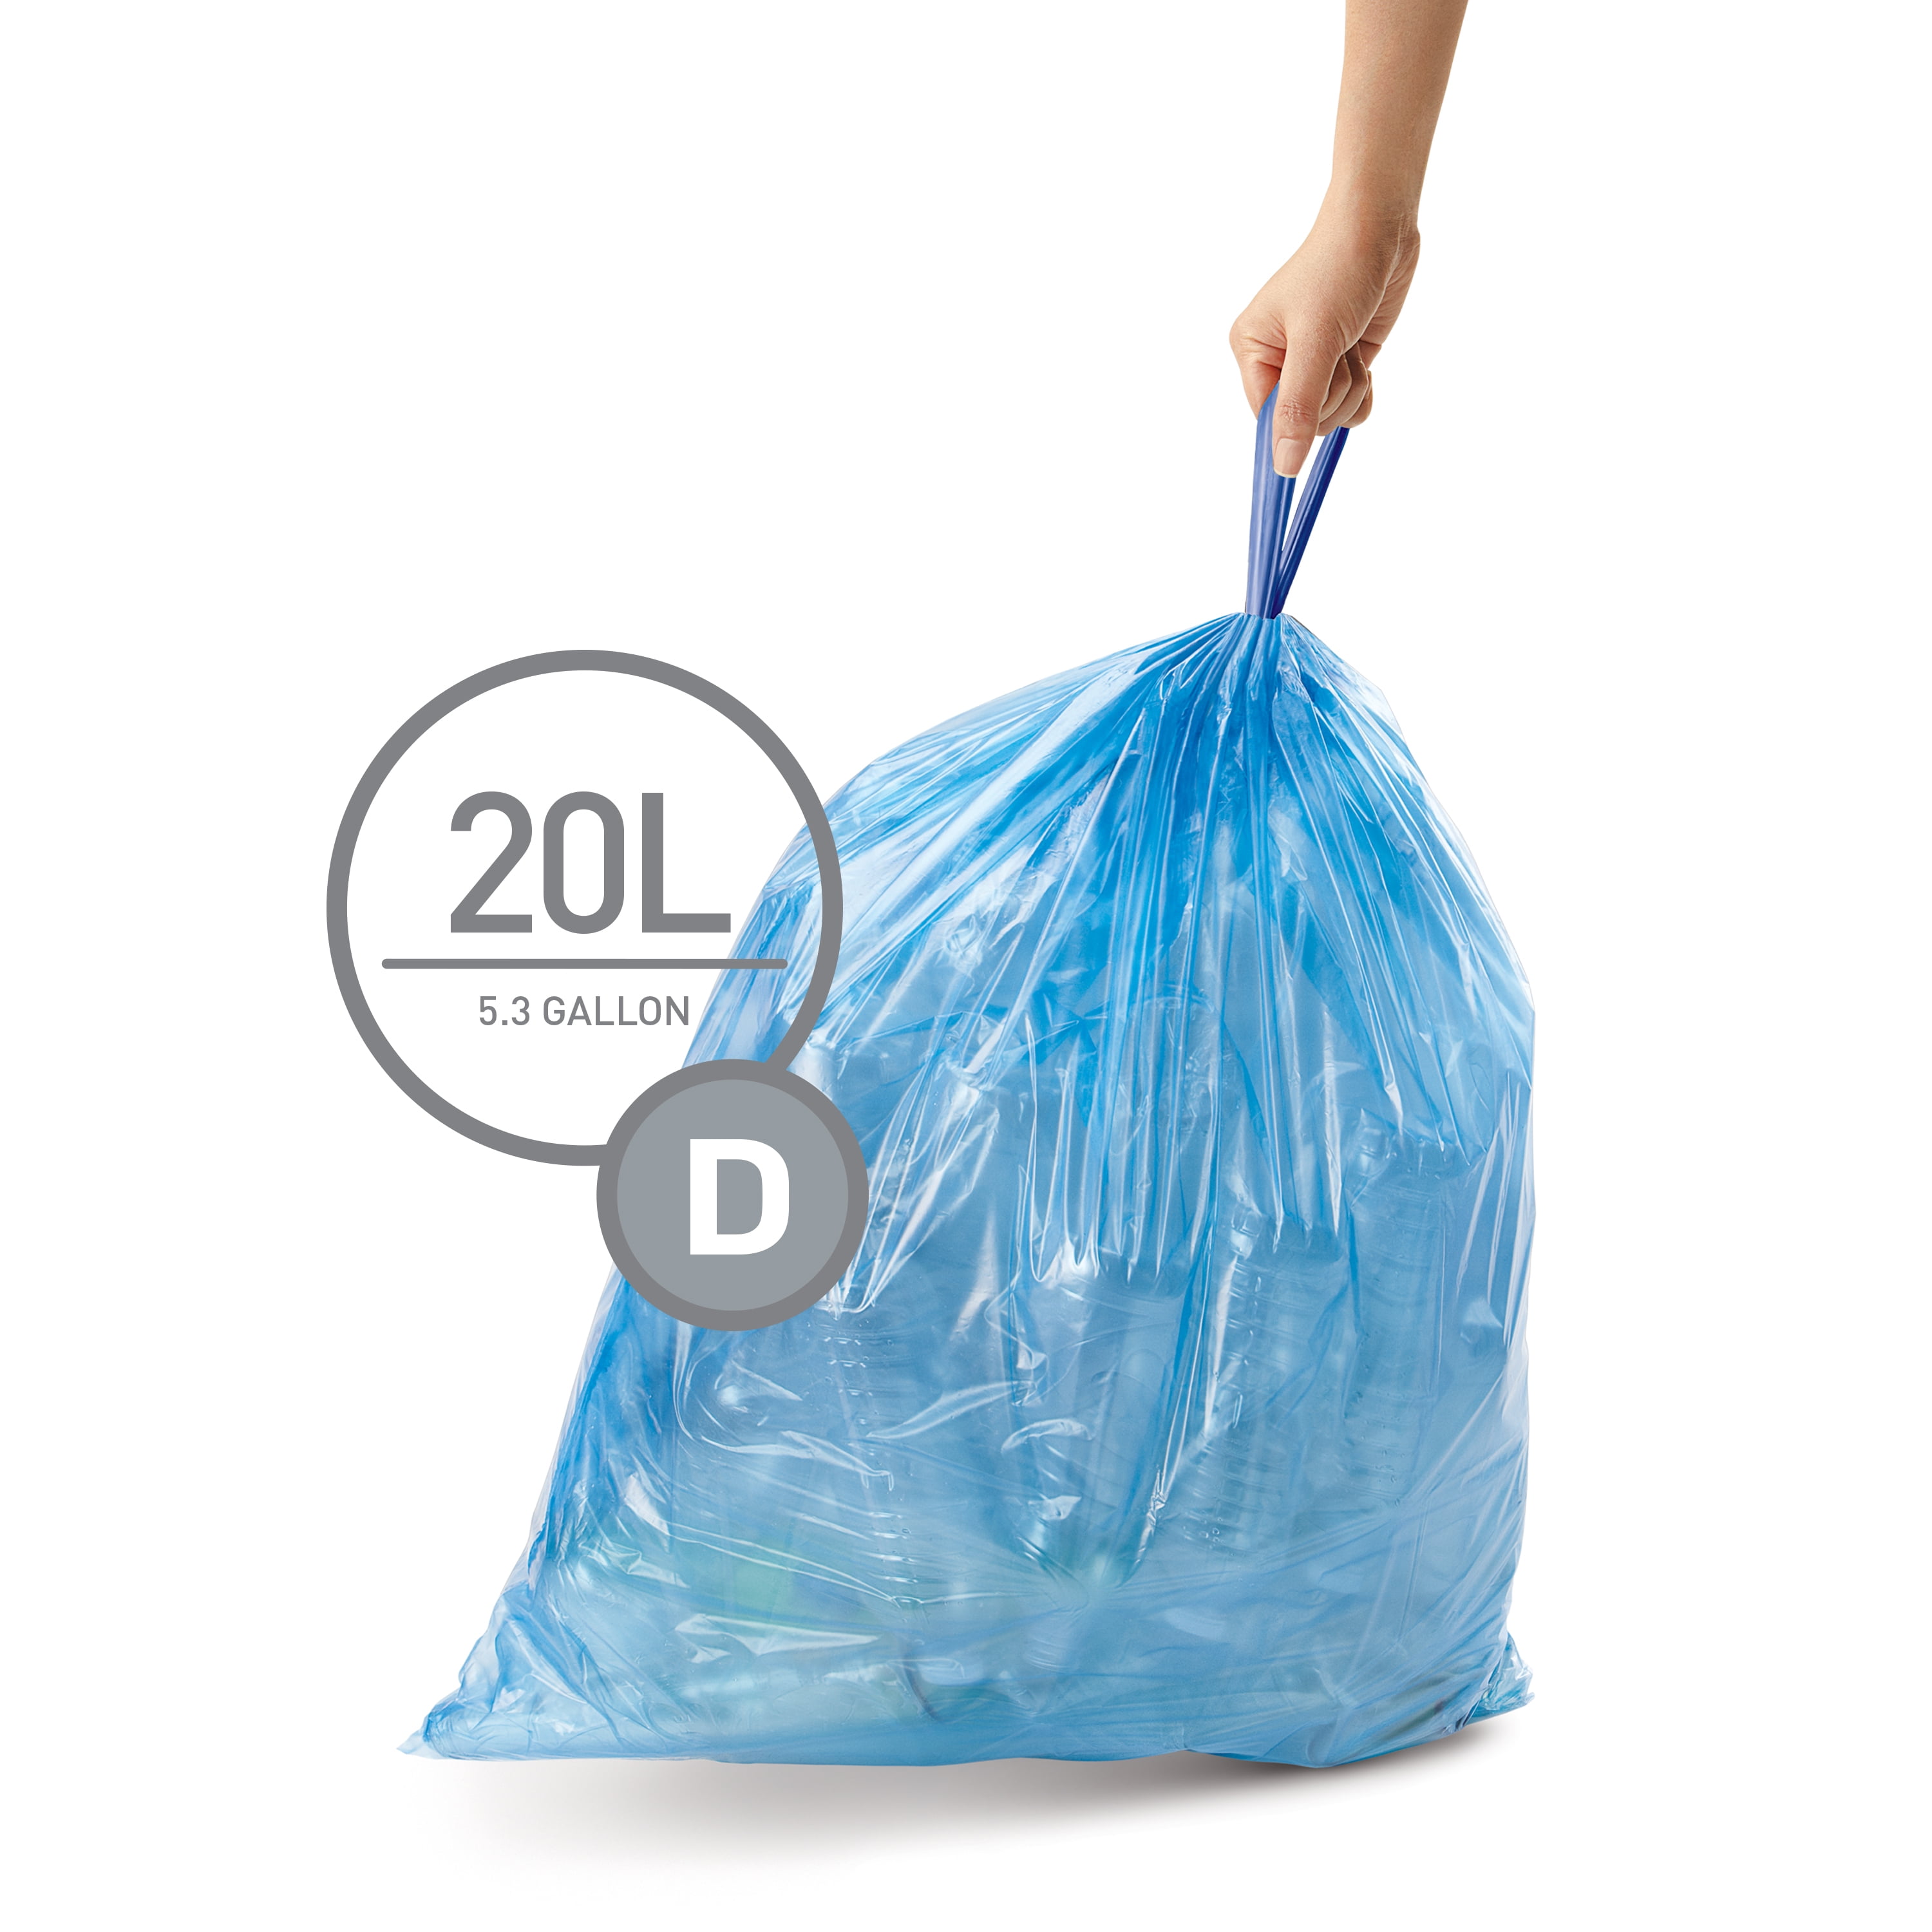 Trash bags, code D, 20 L / 60 pcs., plastic - simplehuman brand